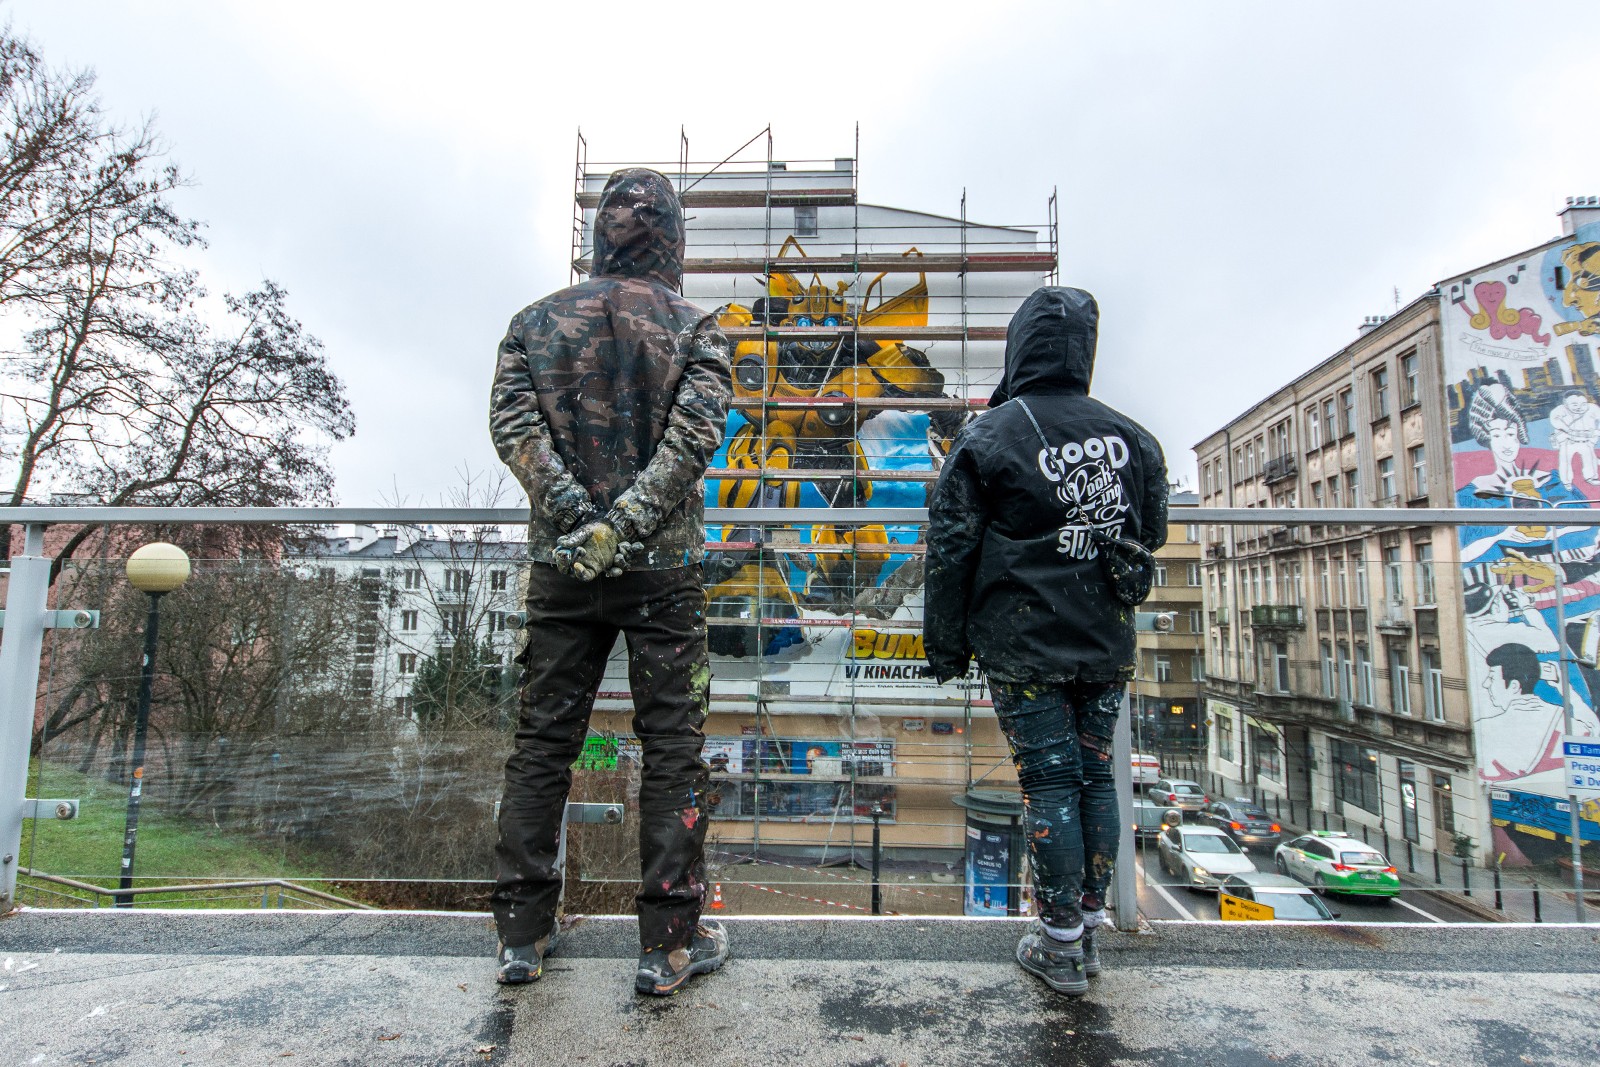 Painters make advertising mural of the film Bumblebee at the 36 Tamka street in Warsaw | Bumblebee | Portfolio